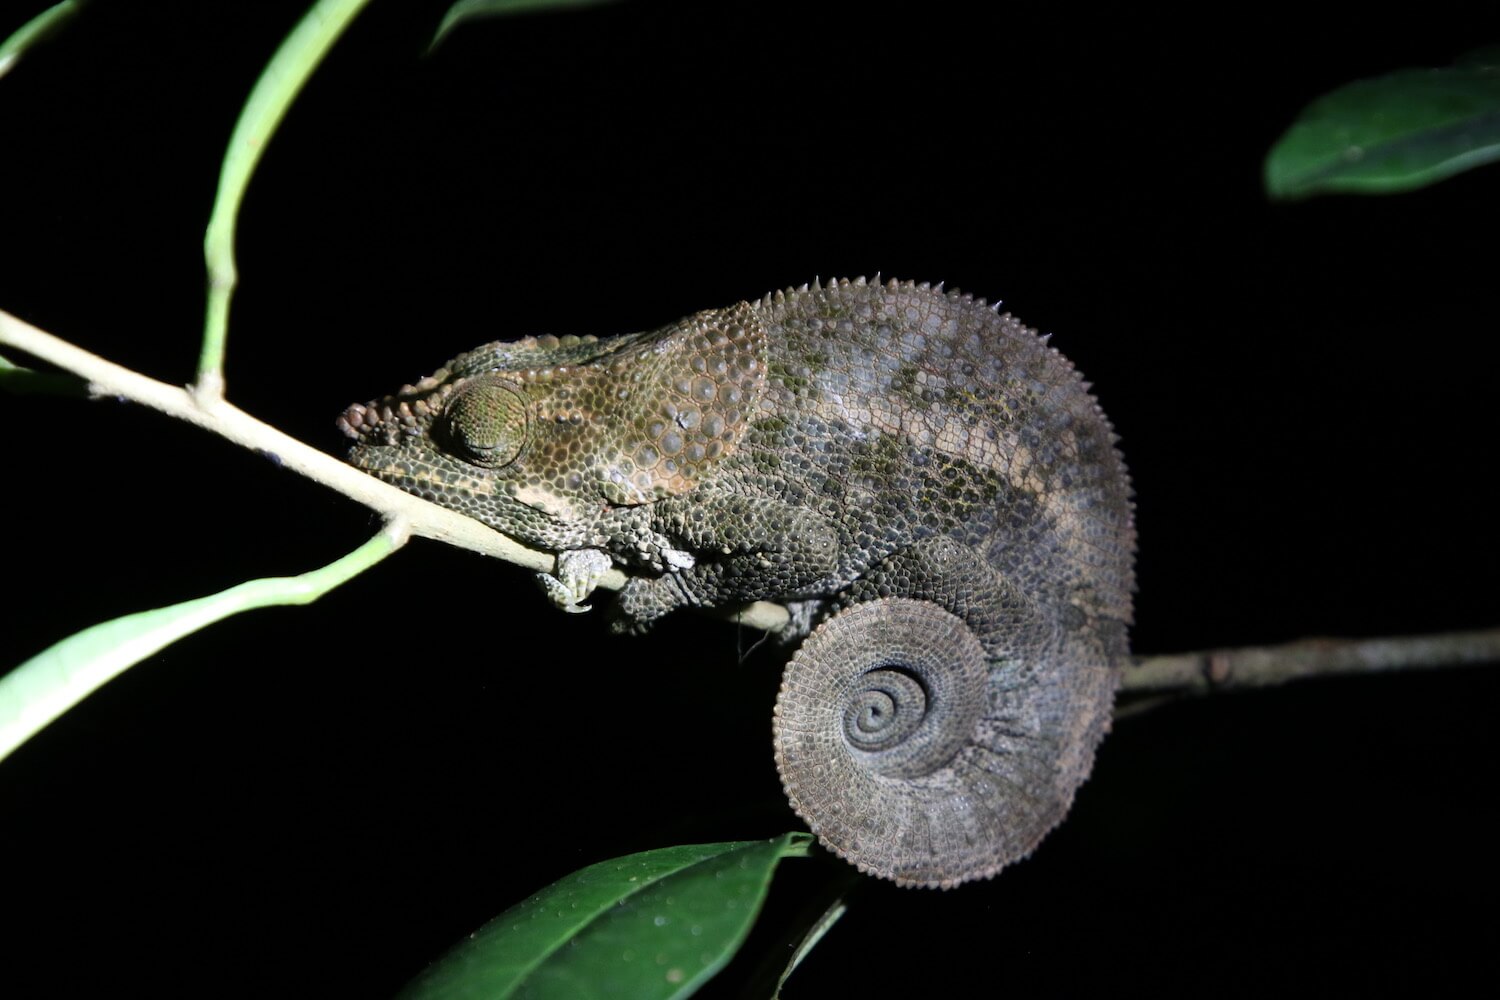 Chameleon, eyes closed, on brach against background of night.